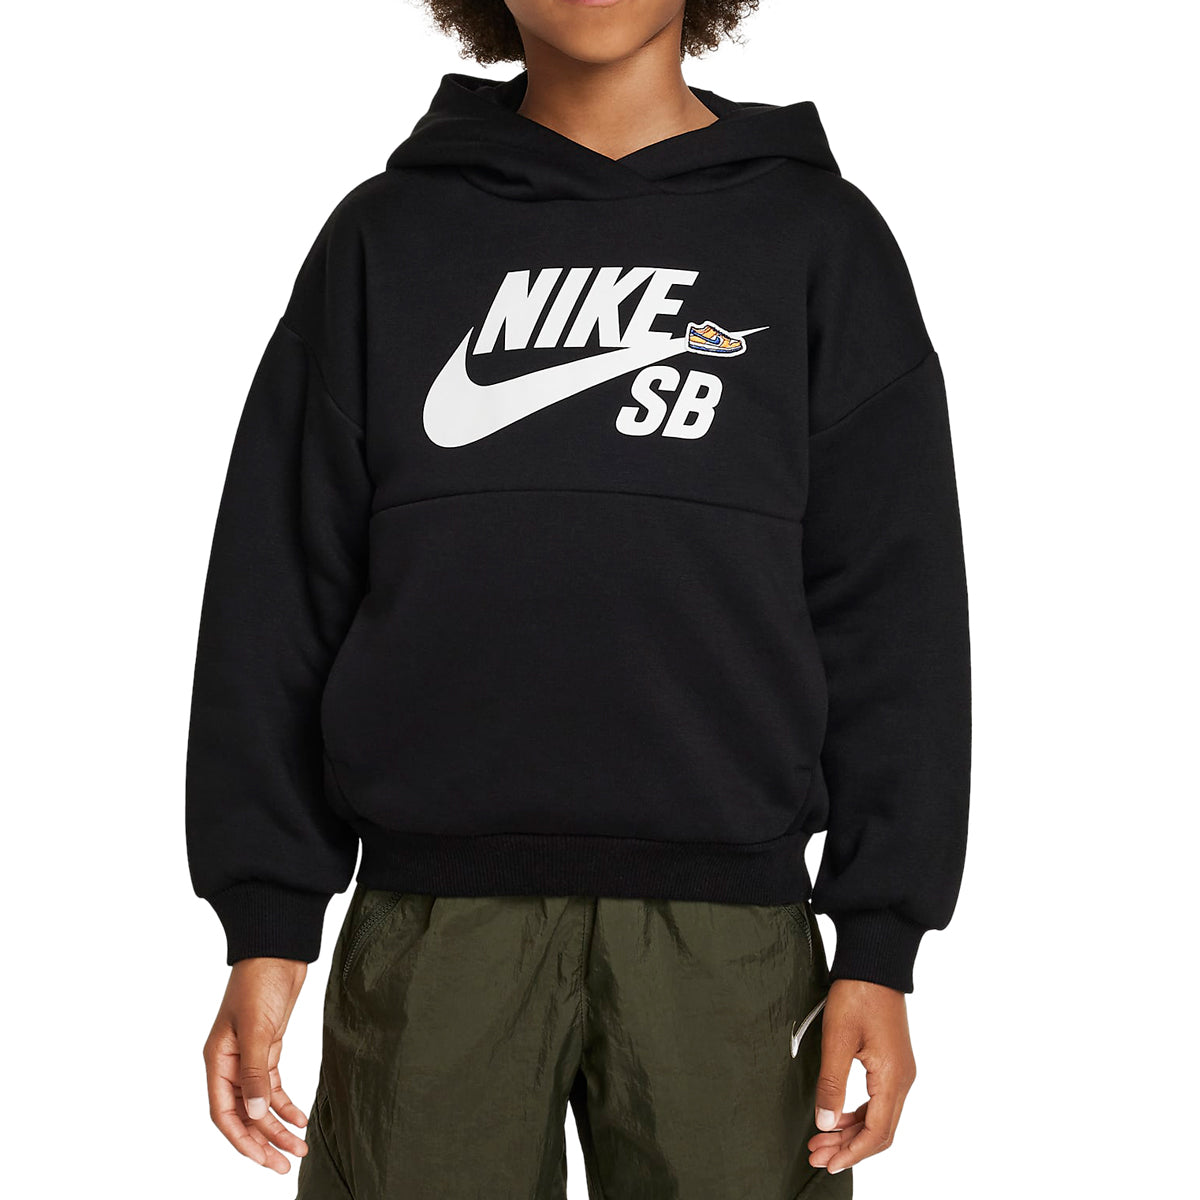 Nike SB Youth Icon Hoodie - Black/White image 1